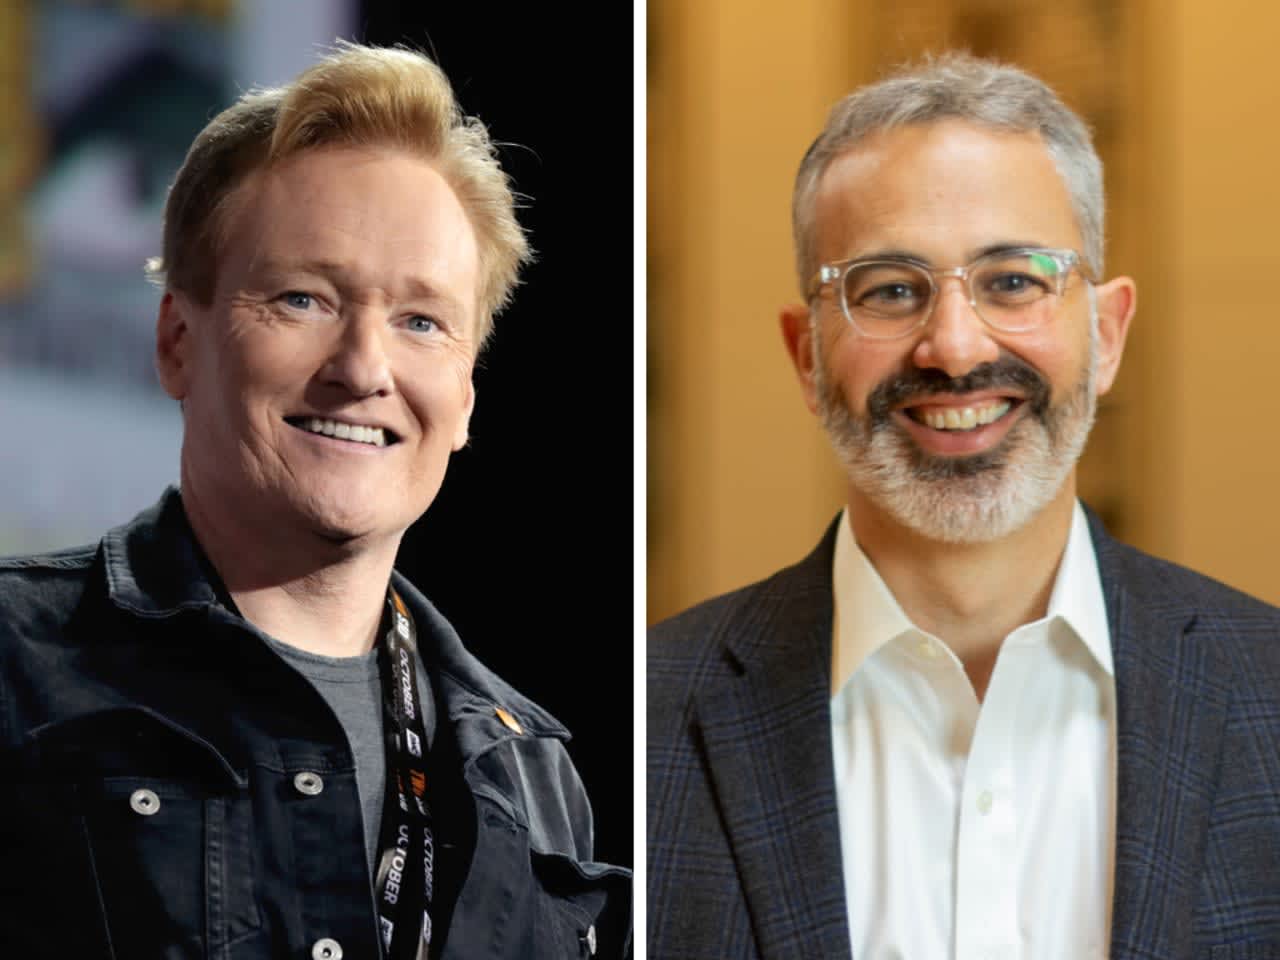 Talk show host Conan O'Brien (left) interviewed Rabbi David Schuck (right) from New Rochelle in a podcast episode.